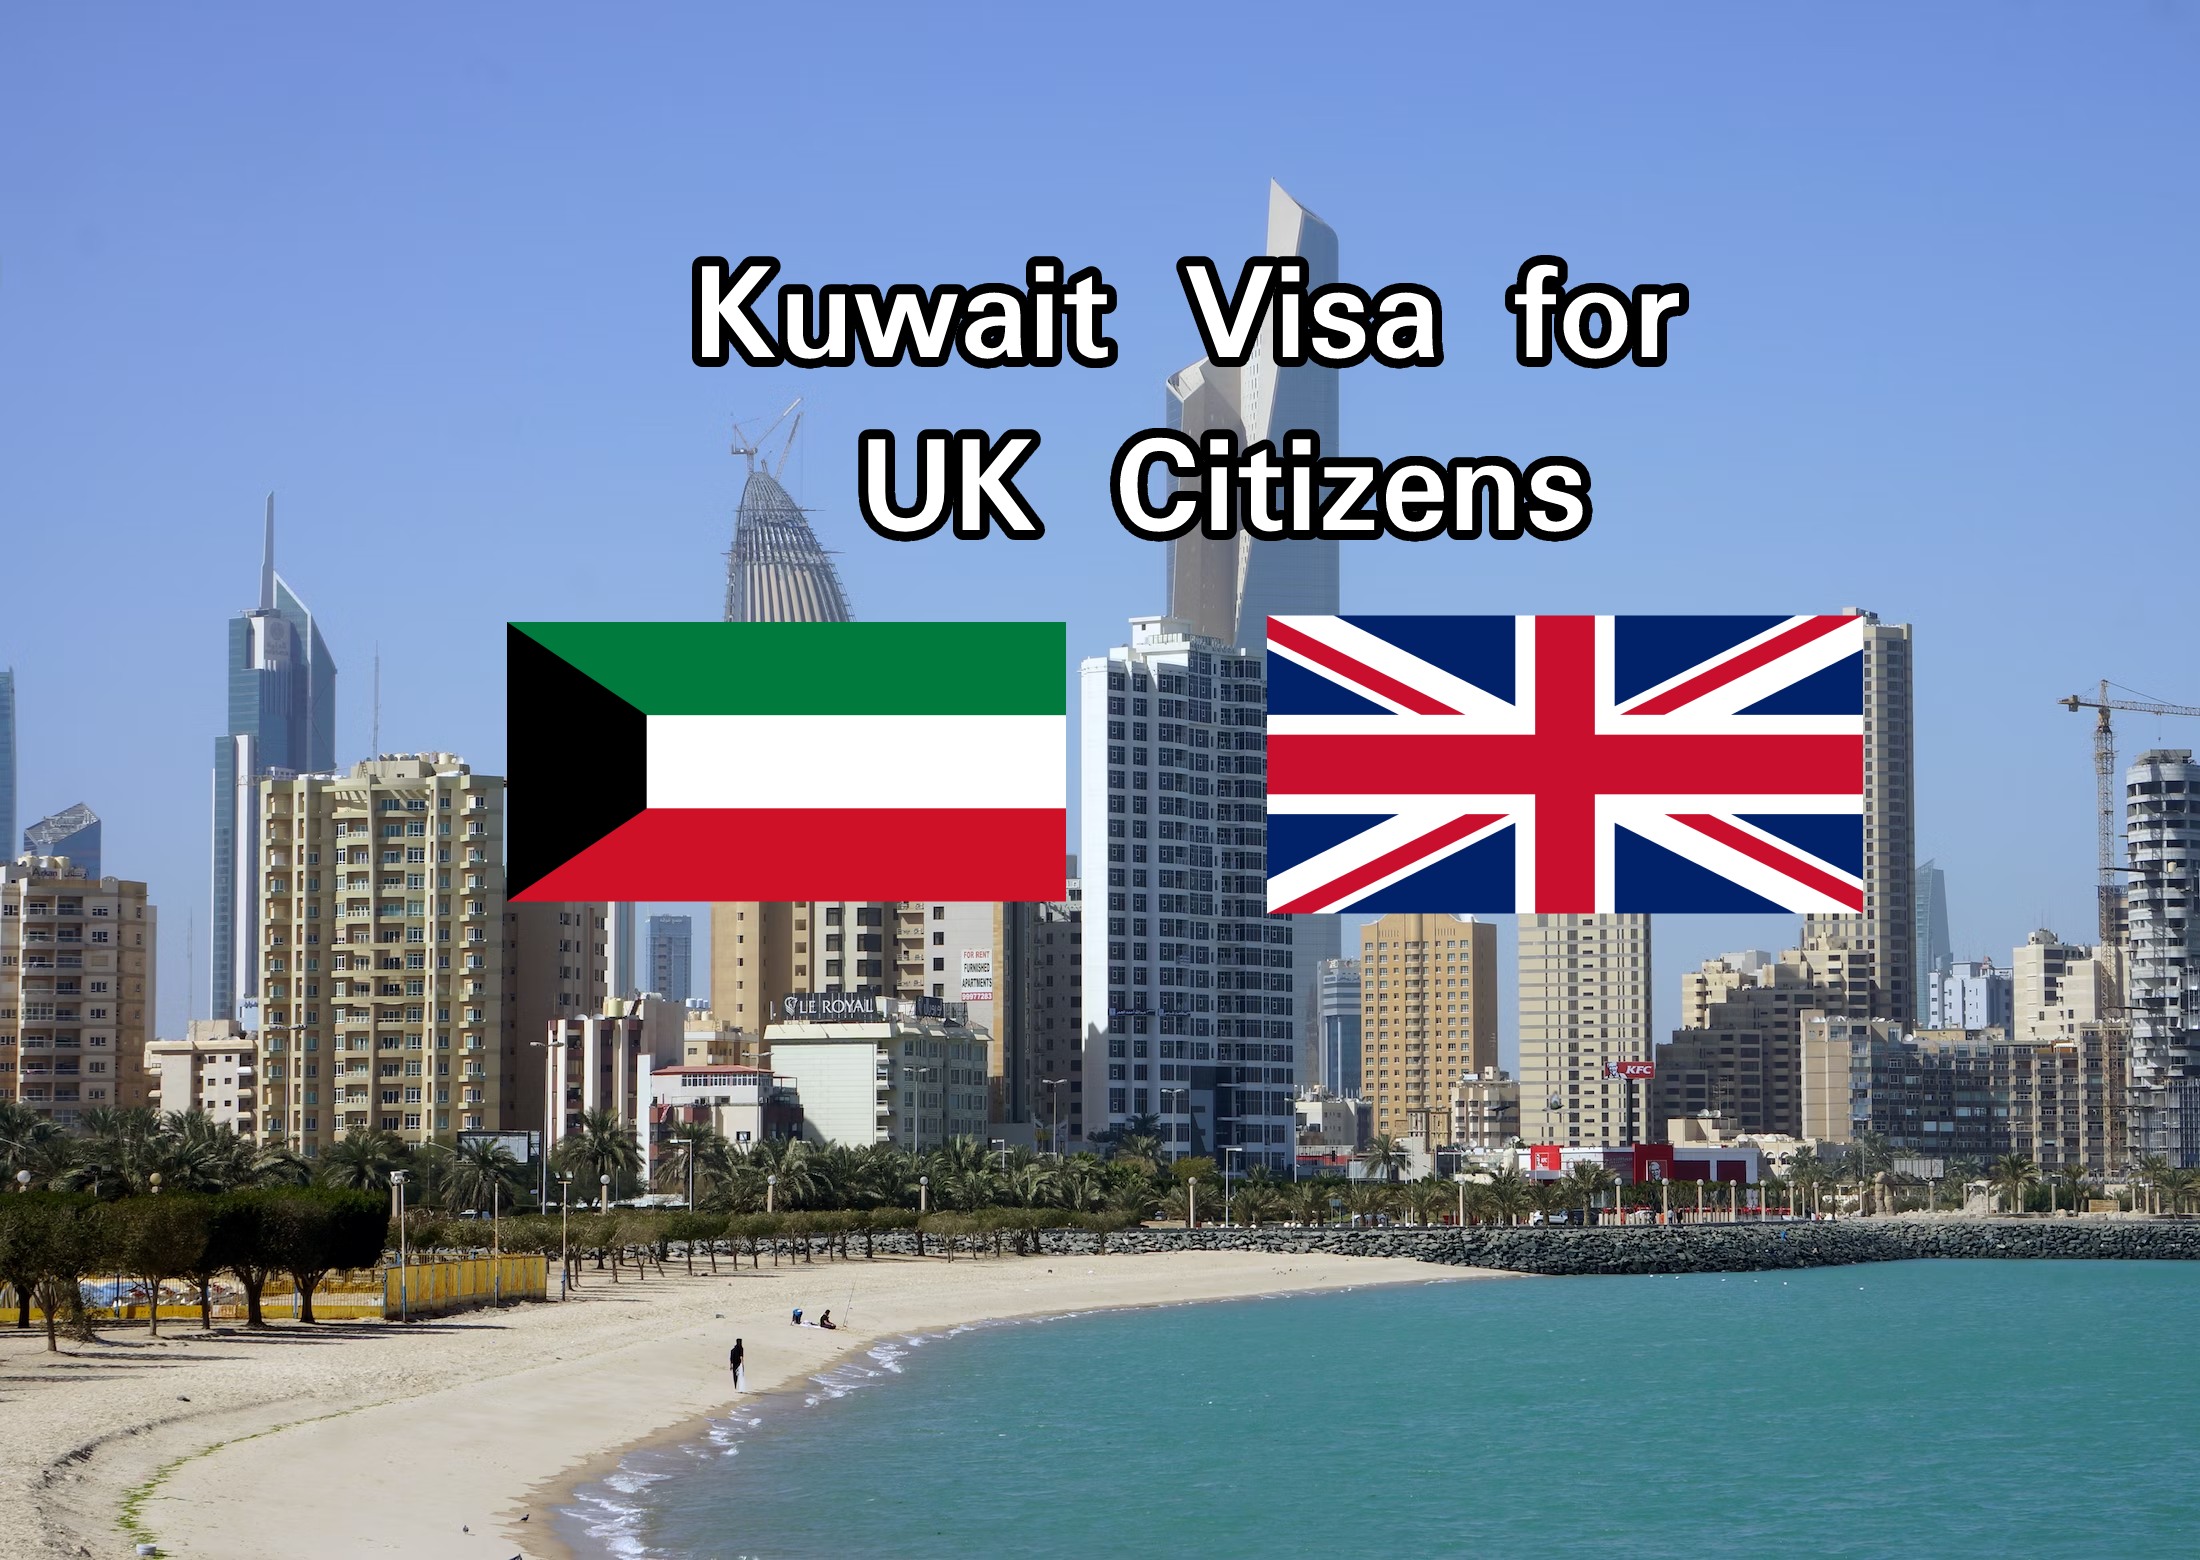 Kuwait Visa for UK Citizens